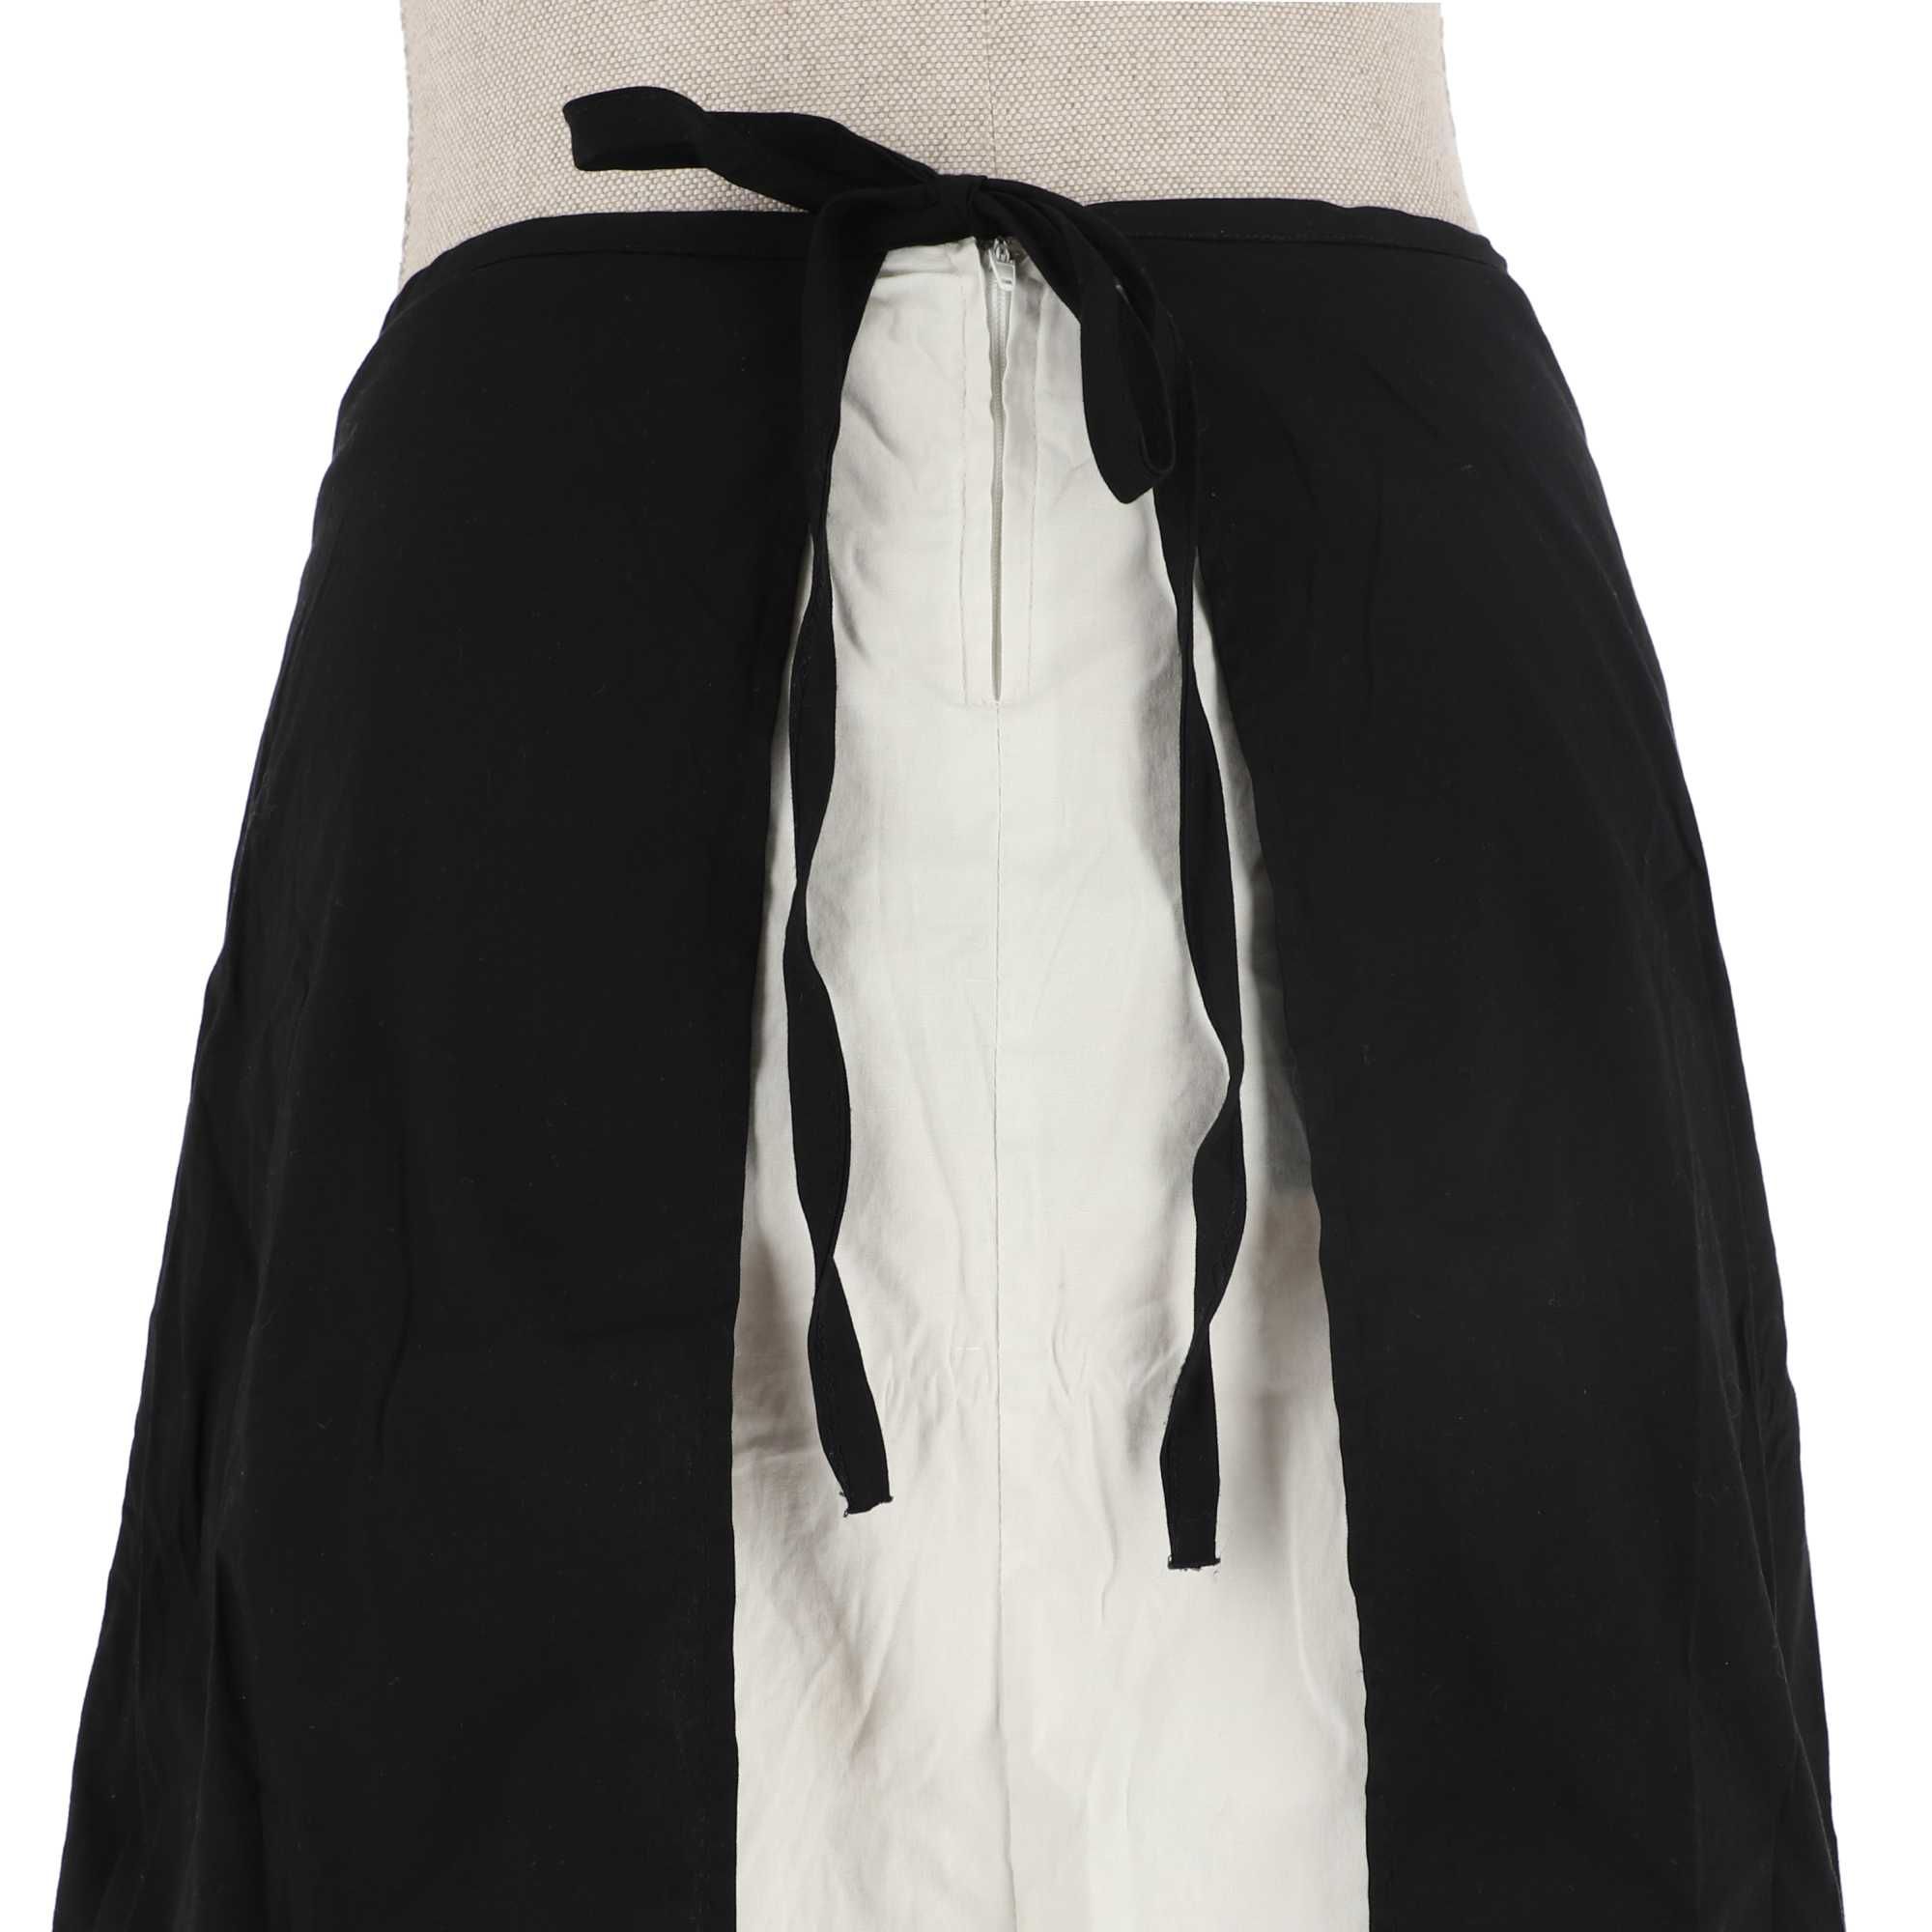 Czarno-biała spódnica marki Charlotte Russe, rozmiar 40